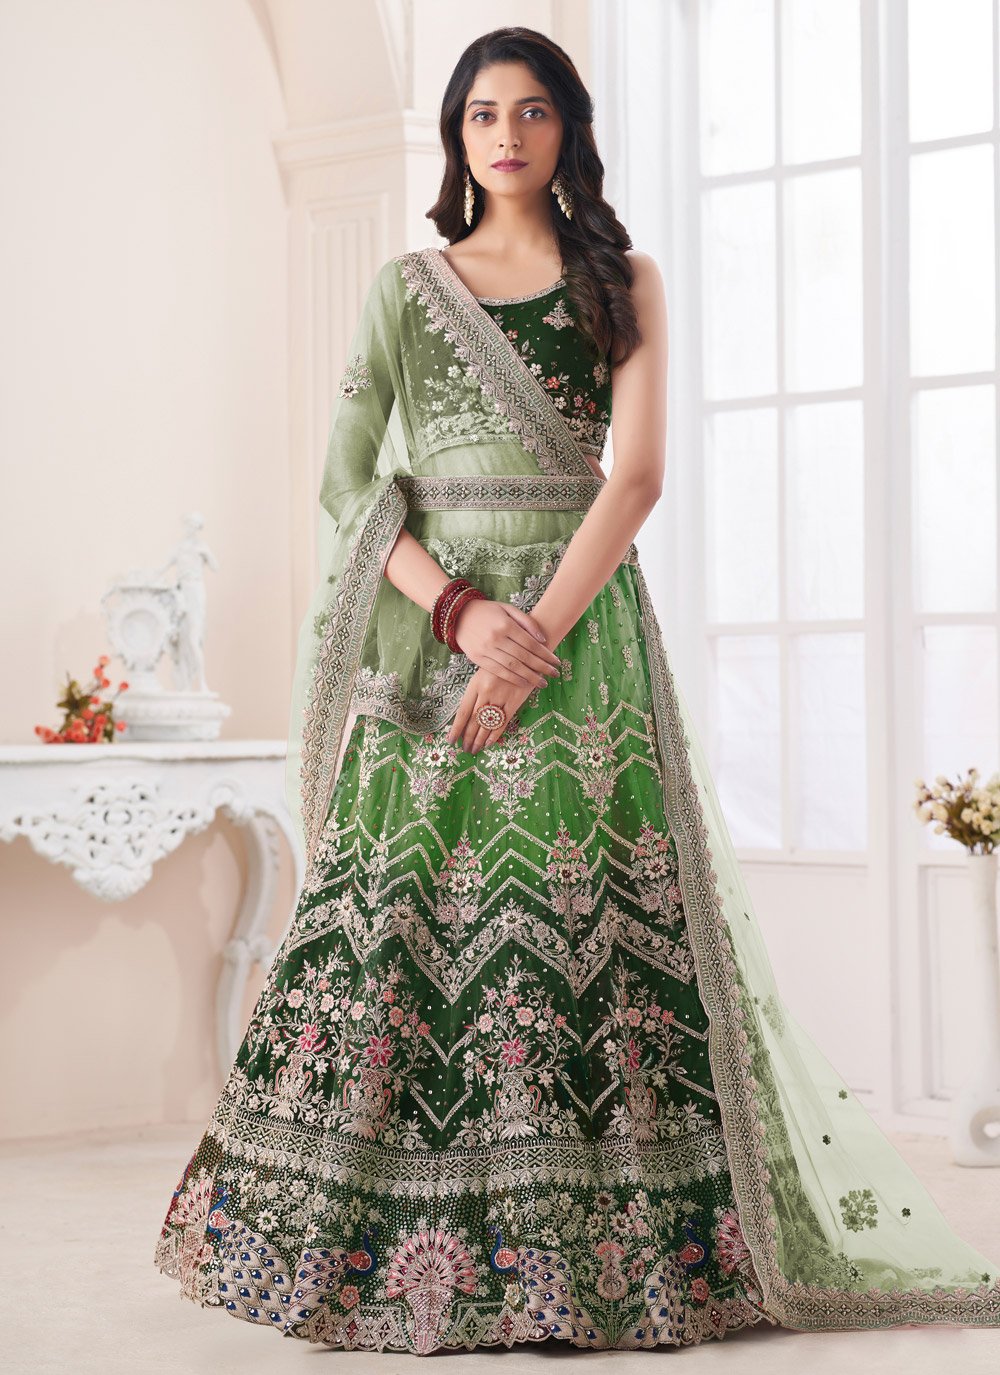 Panihari Bridal Semi Stitched Banarasi Silk Wedding Dark Green Lehenga Choli  at Rs 999 | Banarasi Lehenga in Thane | ID: 2852332560448